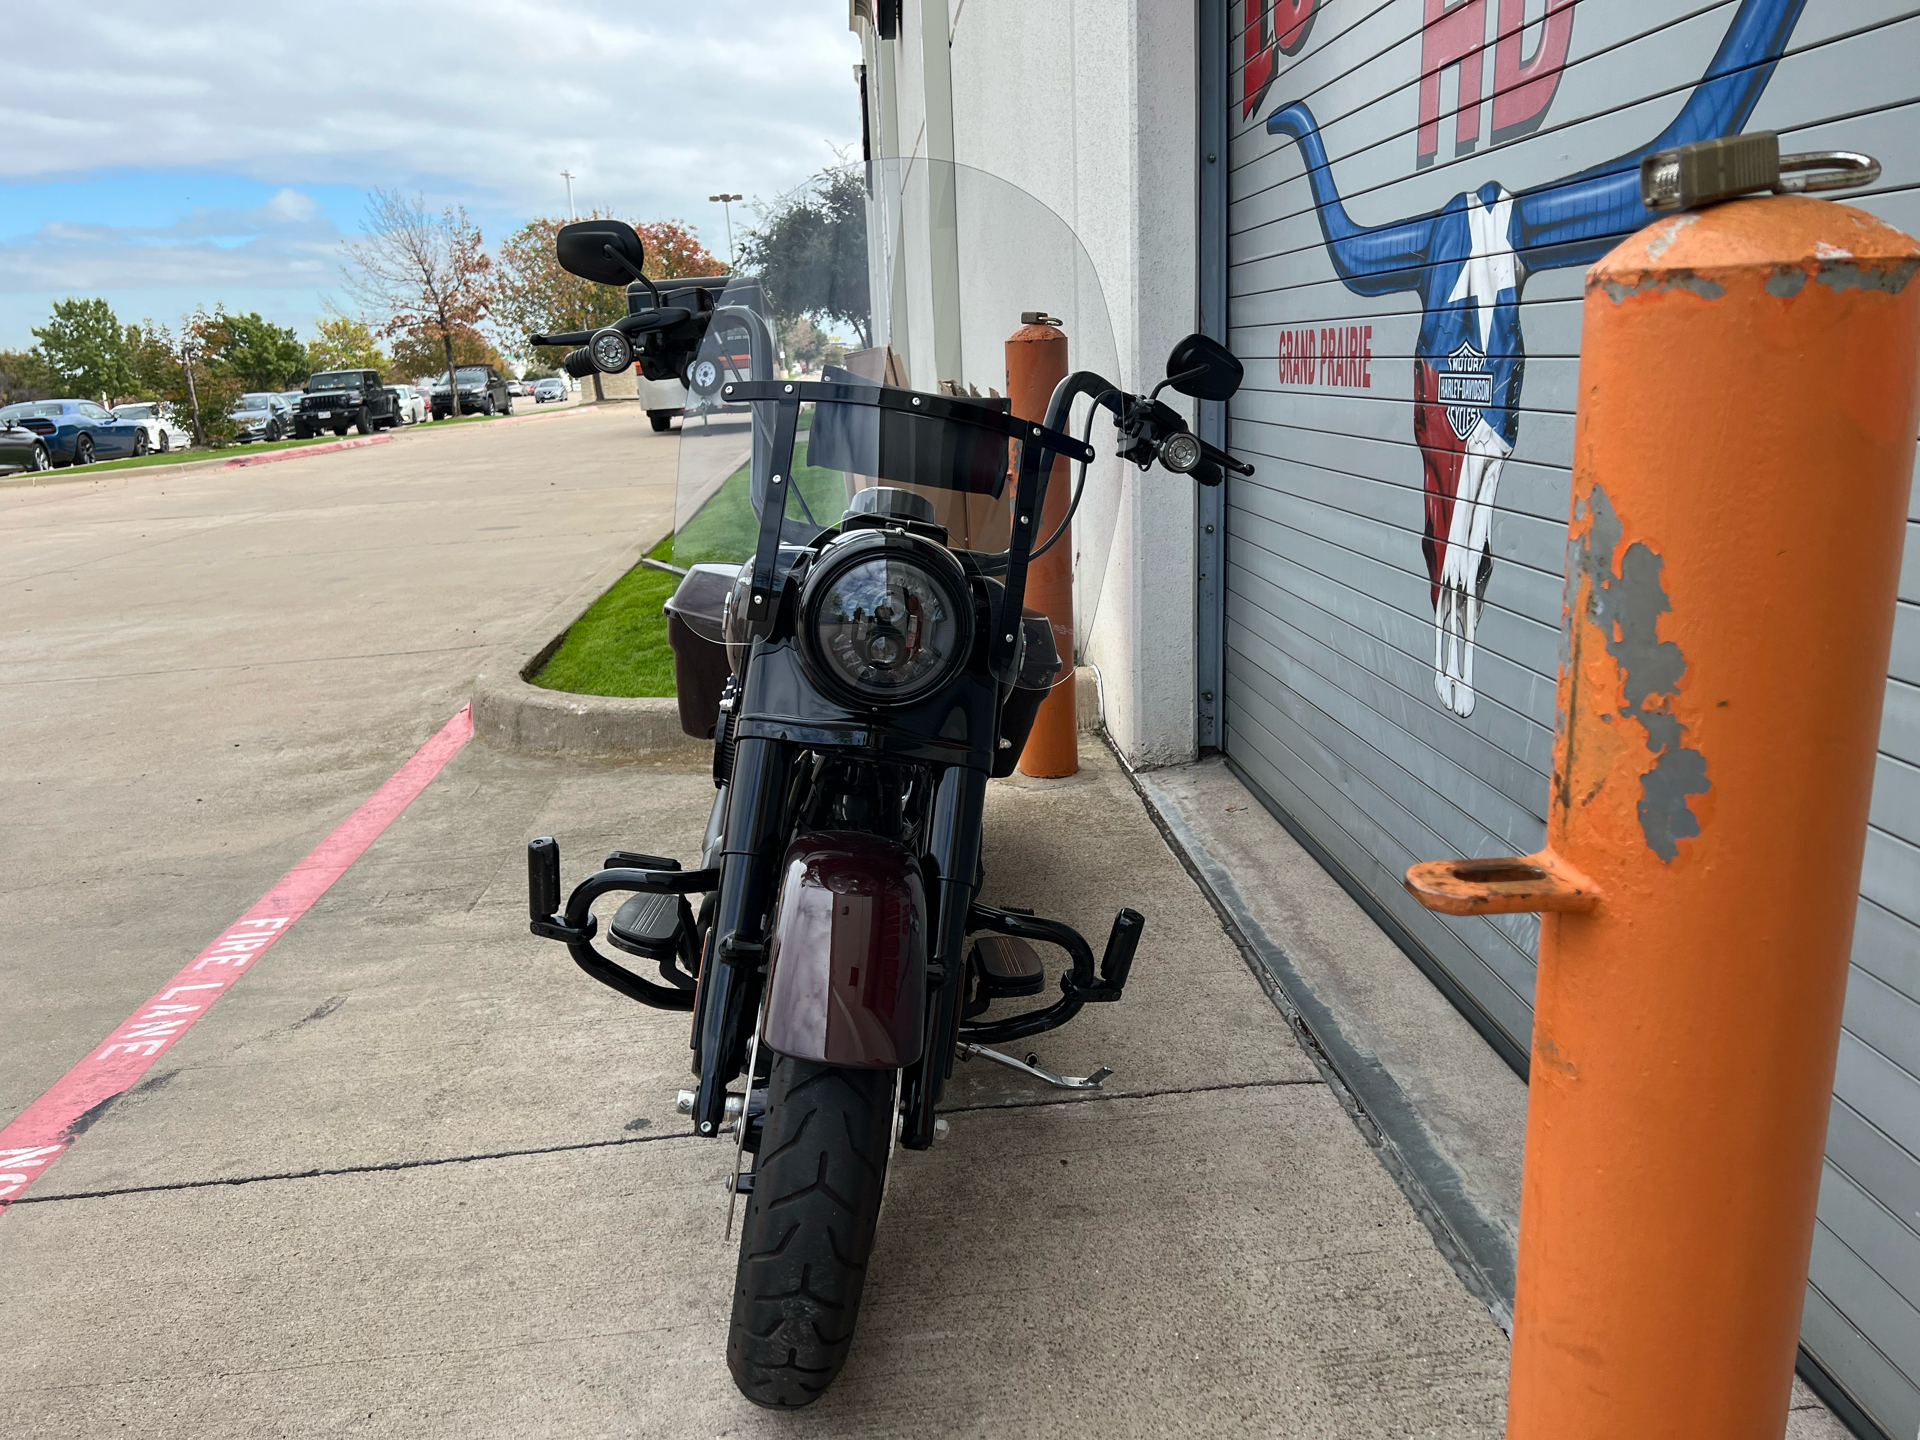 2022 Harley-Davidson Road King® Special in Grand Prairie, Texas - Photo 4